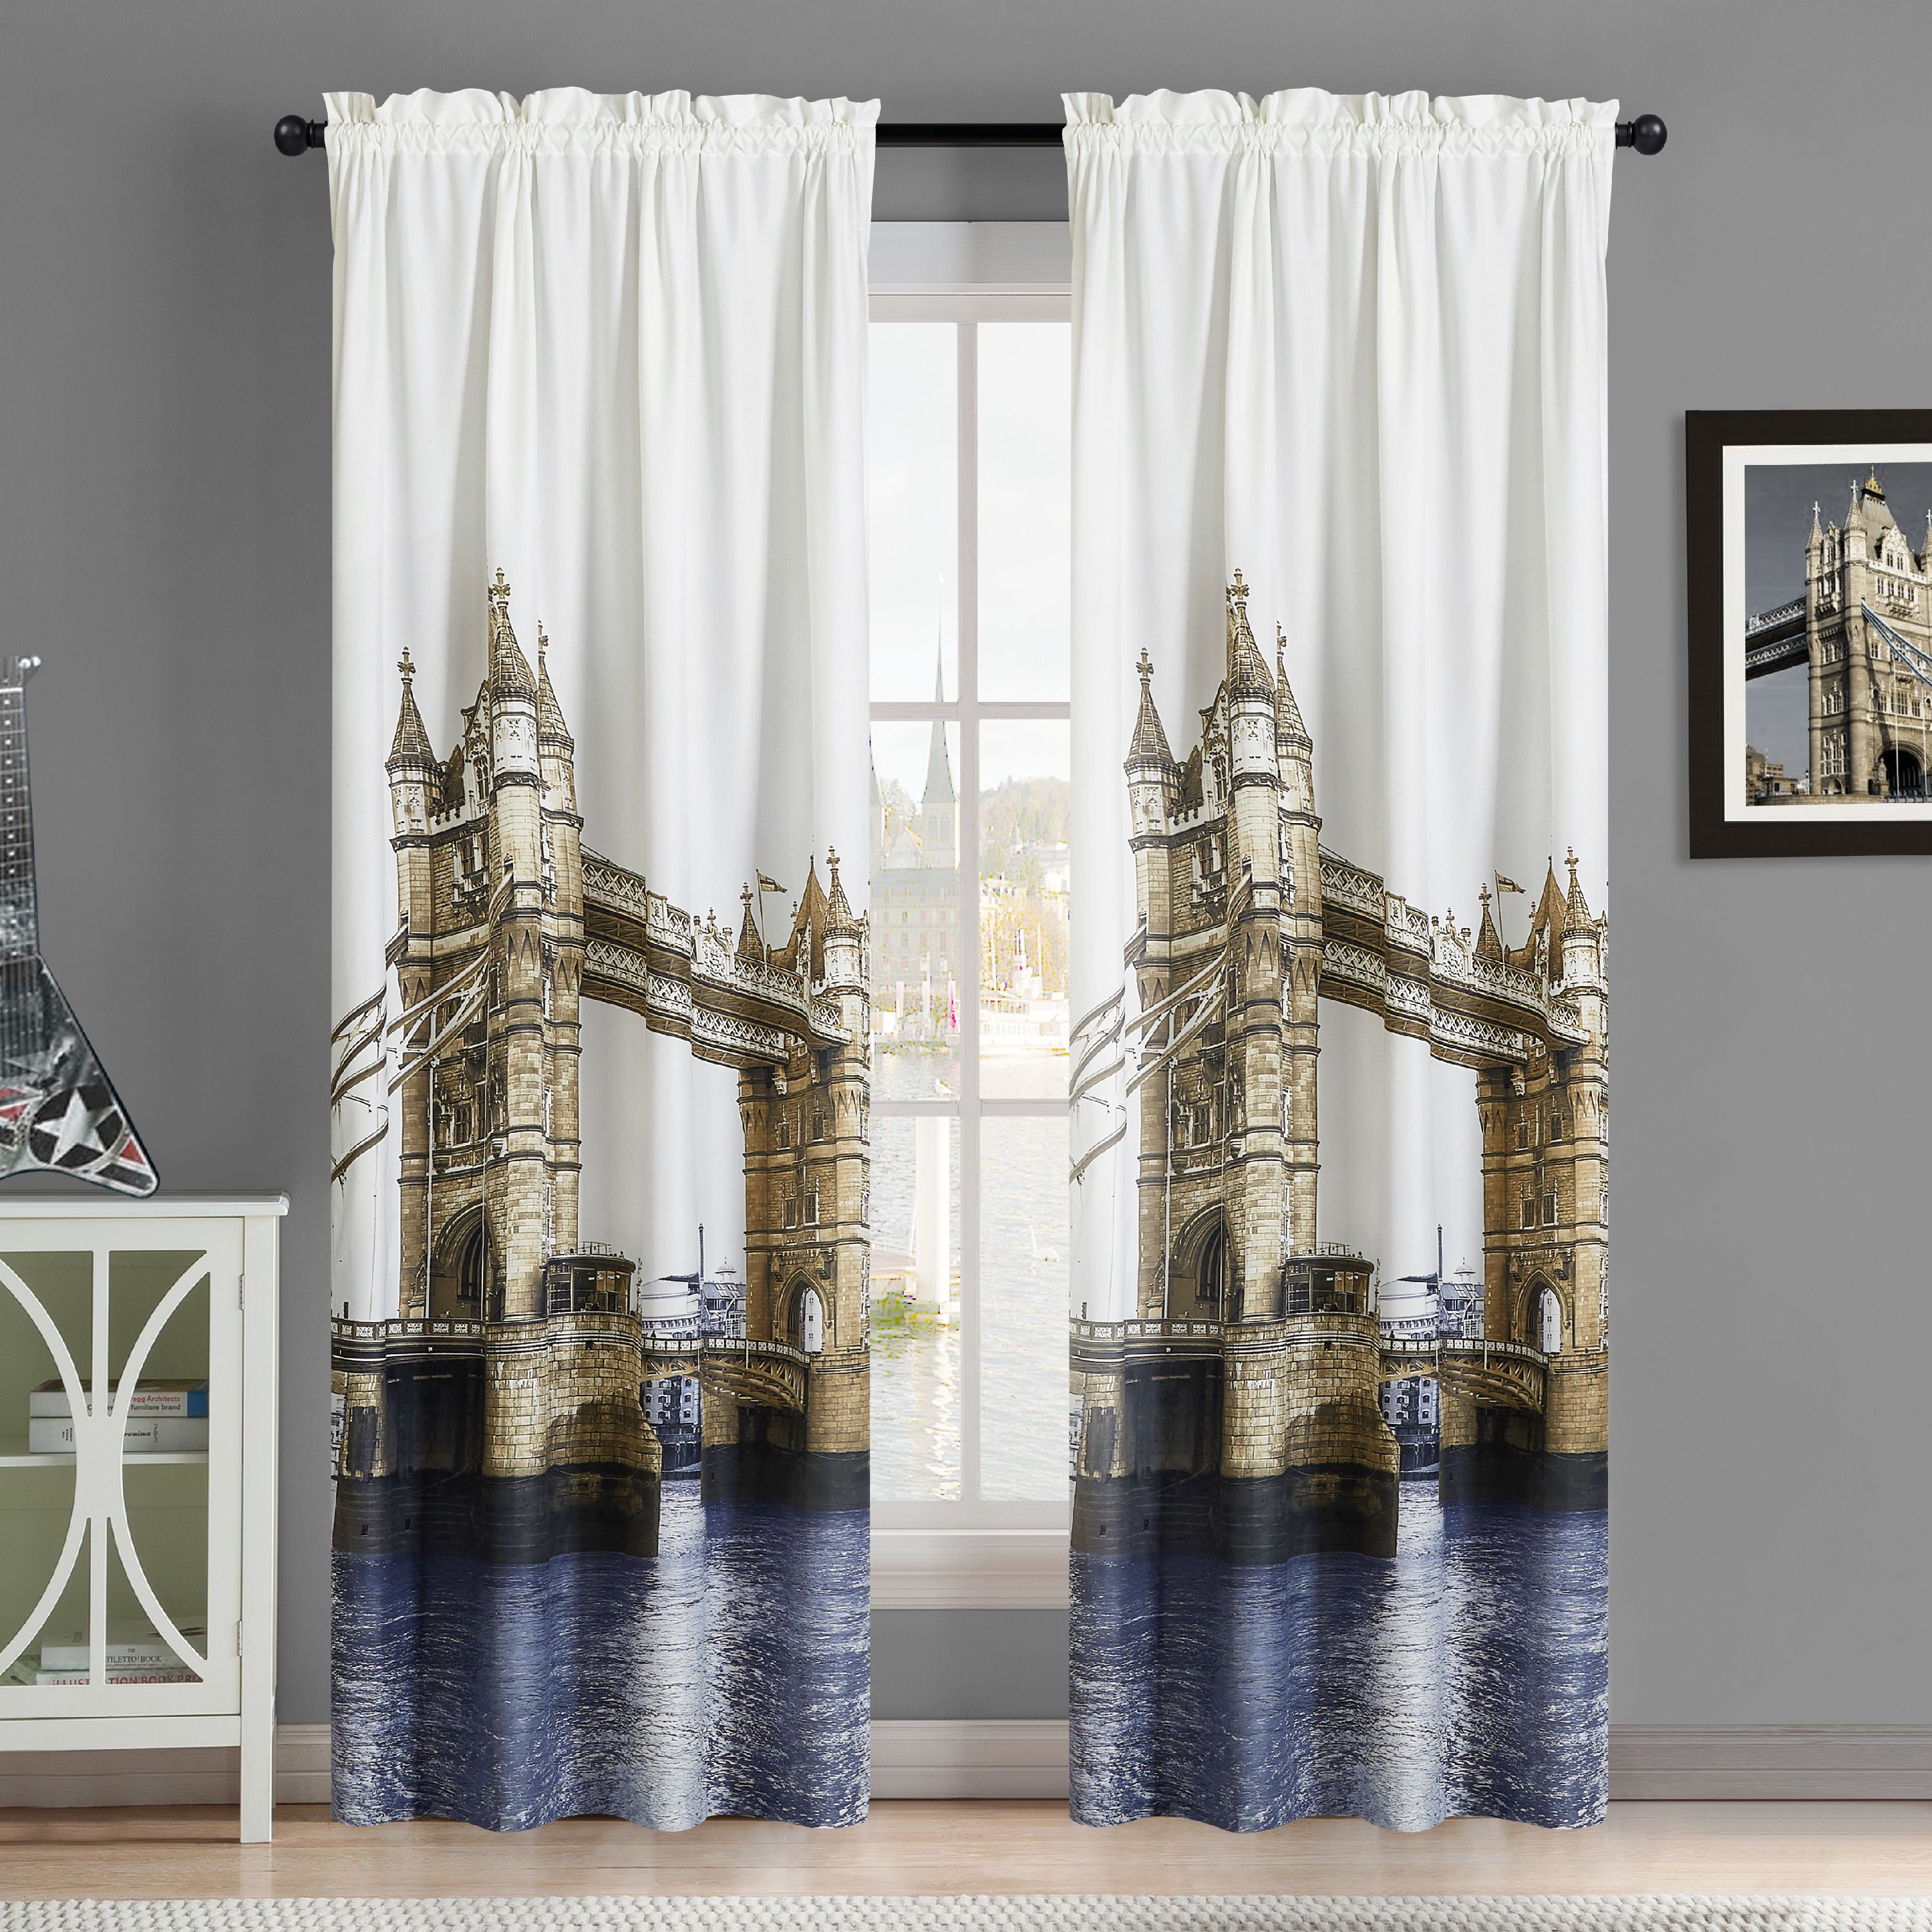 Tower Bridge - London Photoreal, Curtain Panel, Set of 2 - image 1 of 4